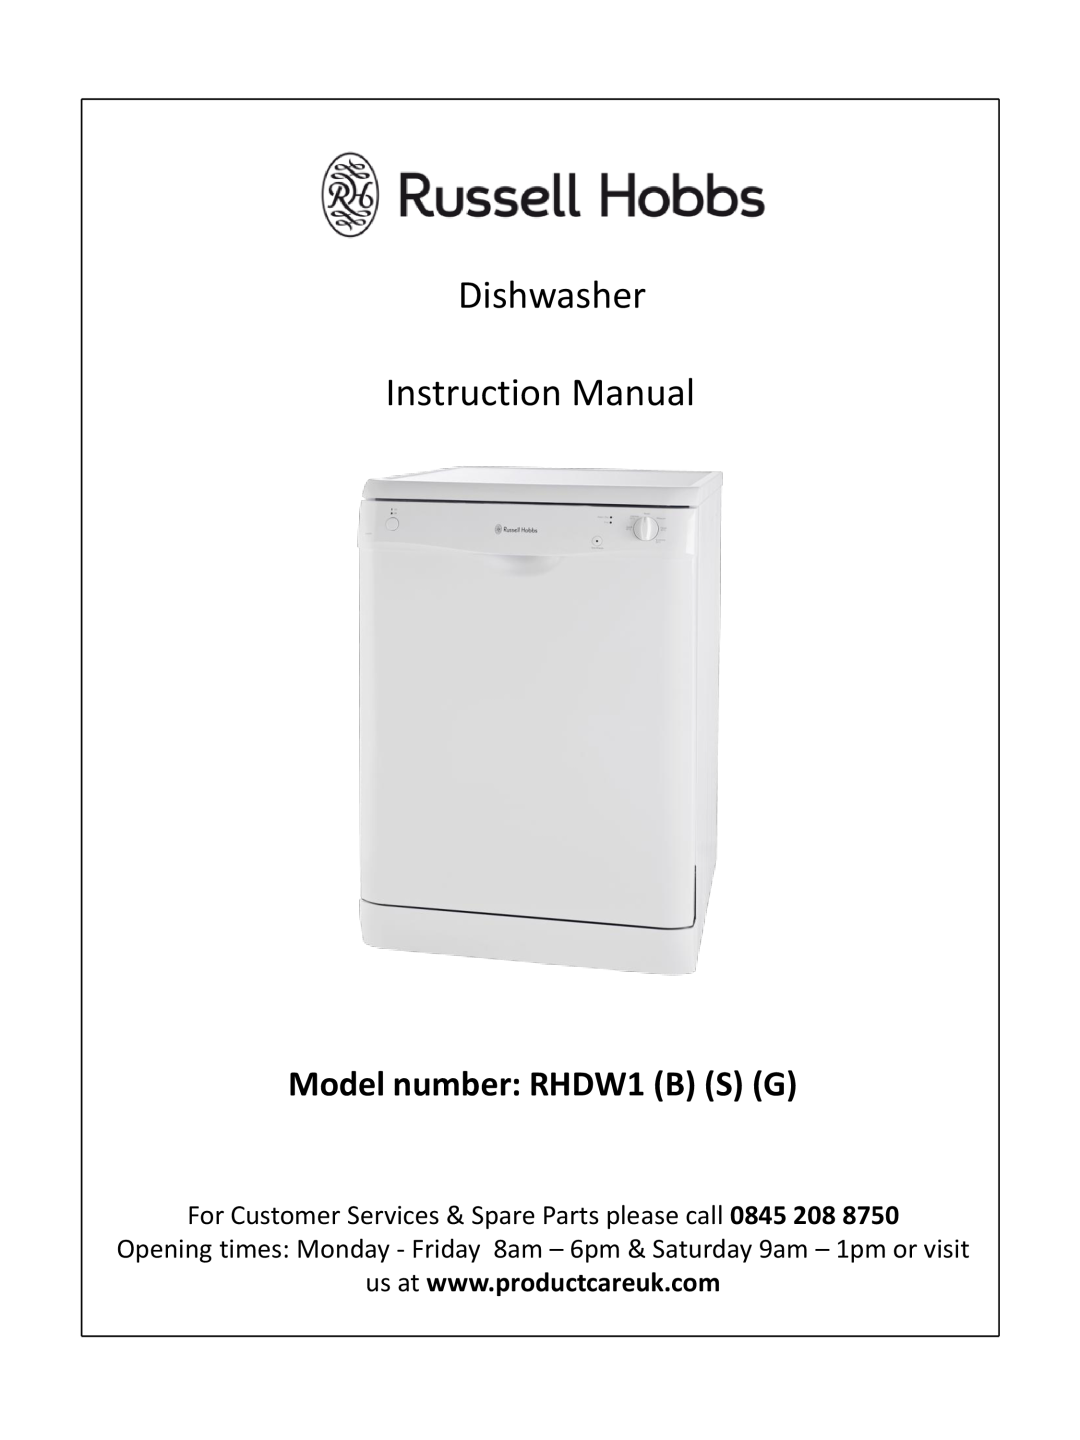 Russell Hobbs RHDW1 (B) (S) (G) instruction manual Model number RHDW1 B S G 